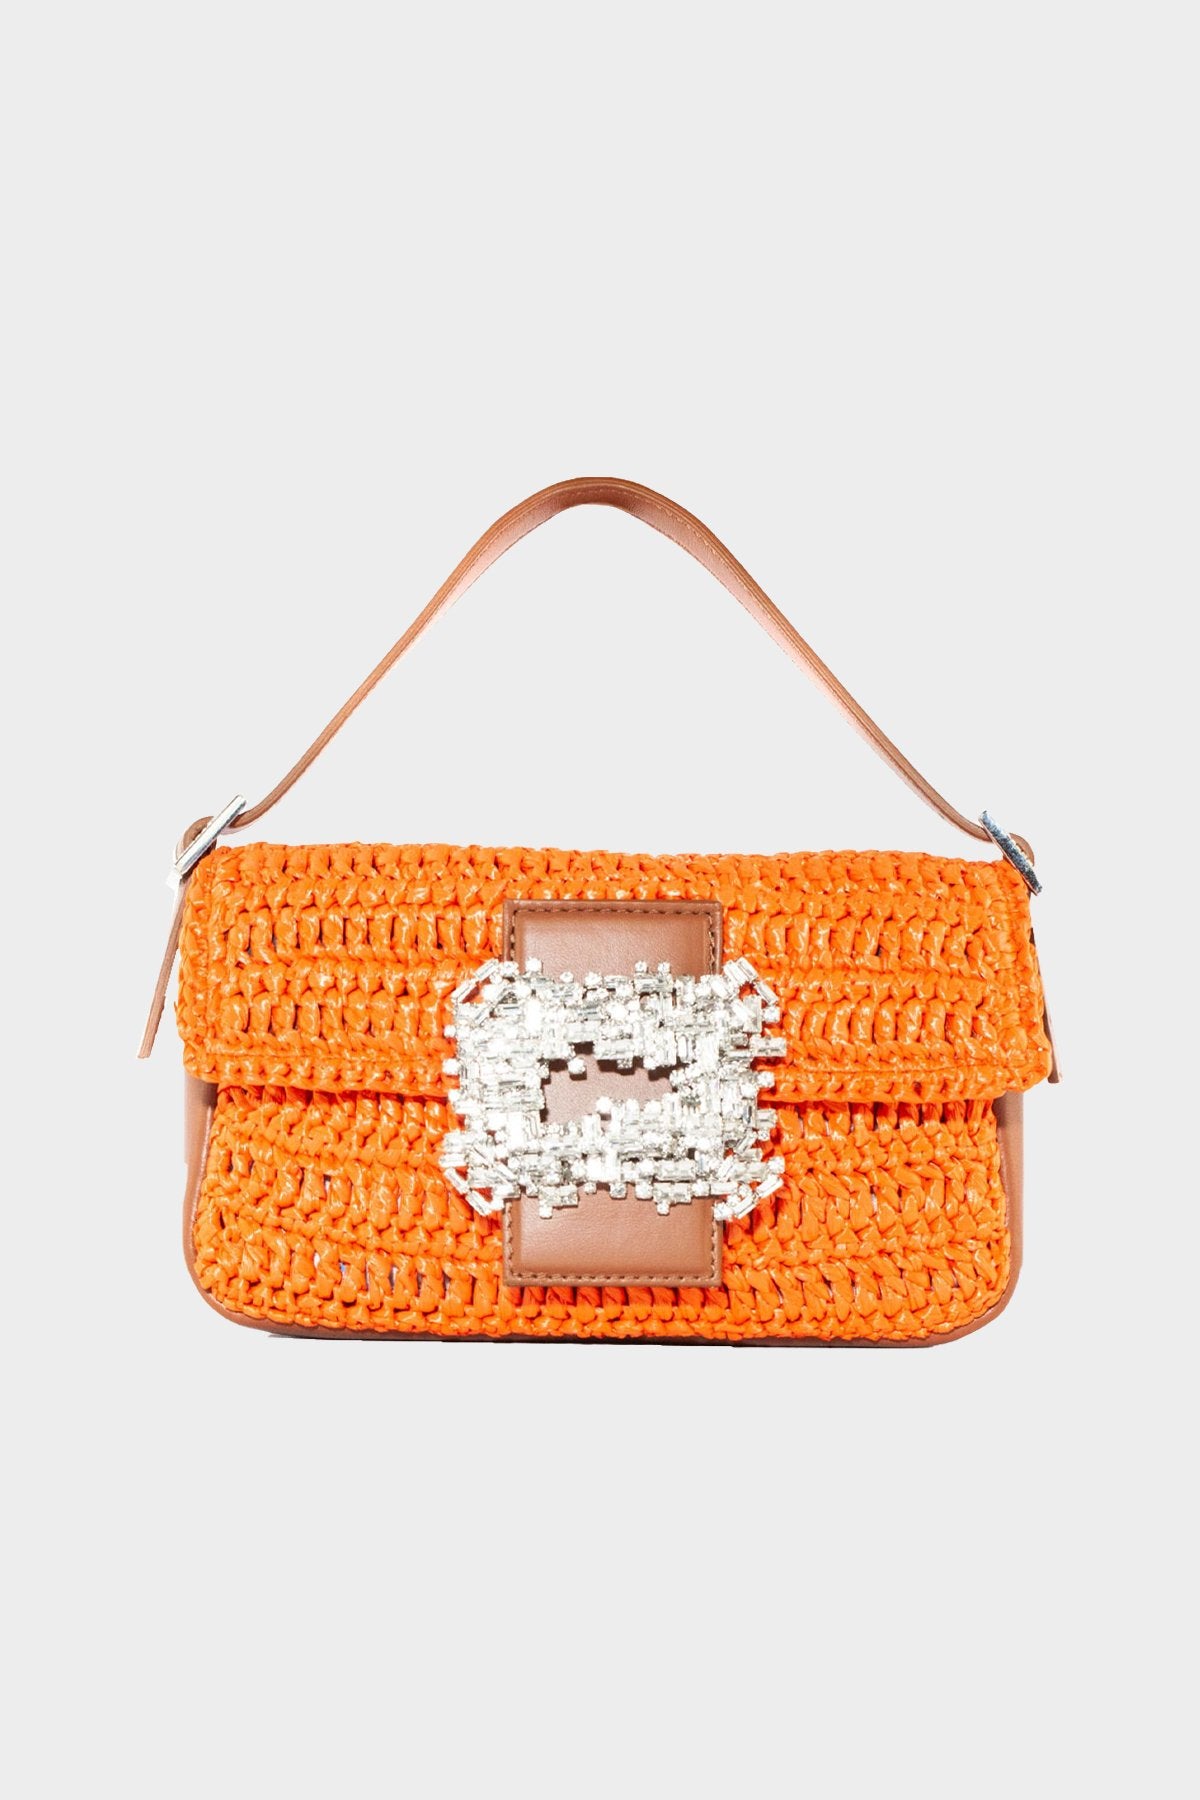 Habibi Crochet Bag in Orange - shop-olivia.com